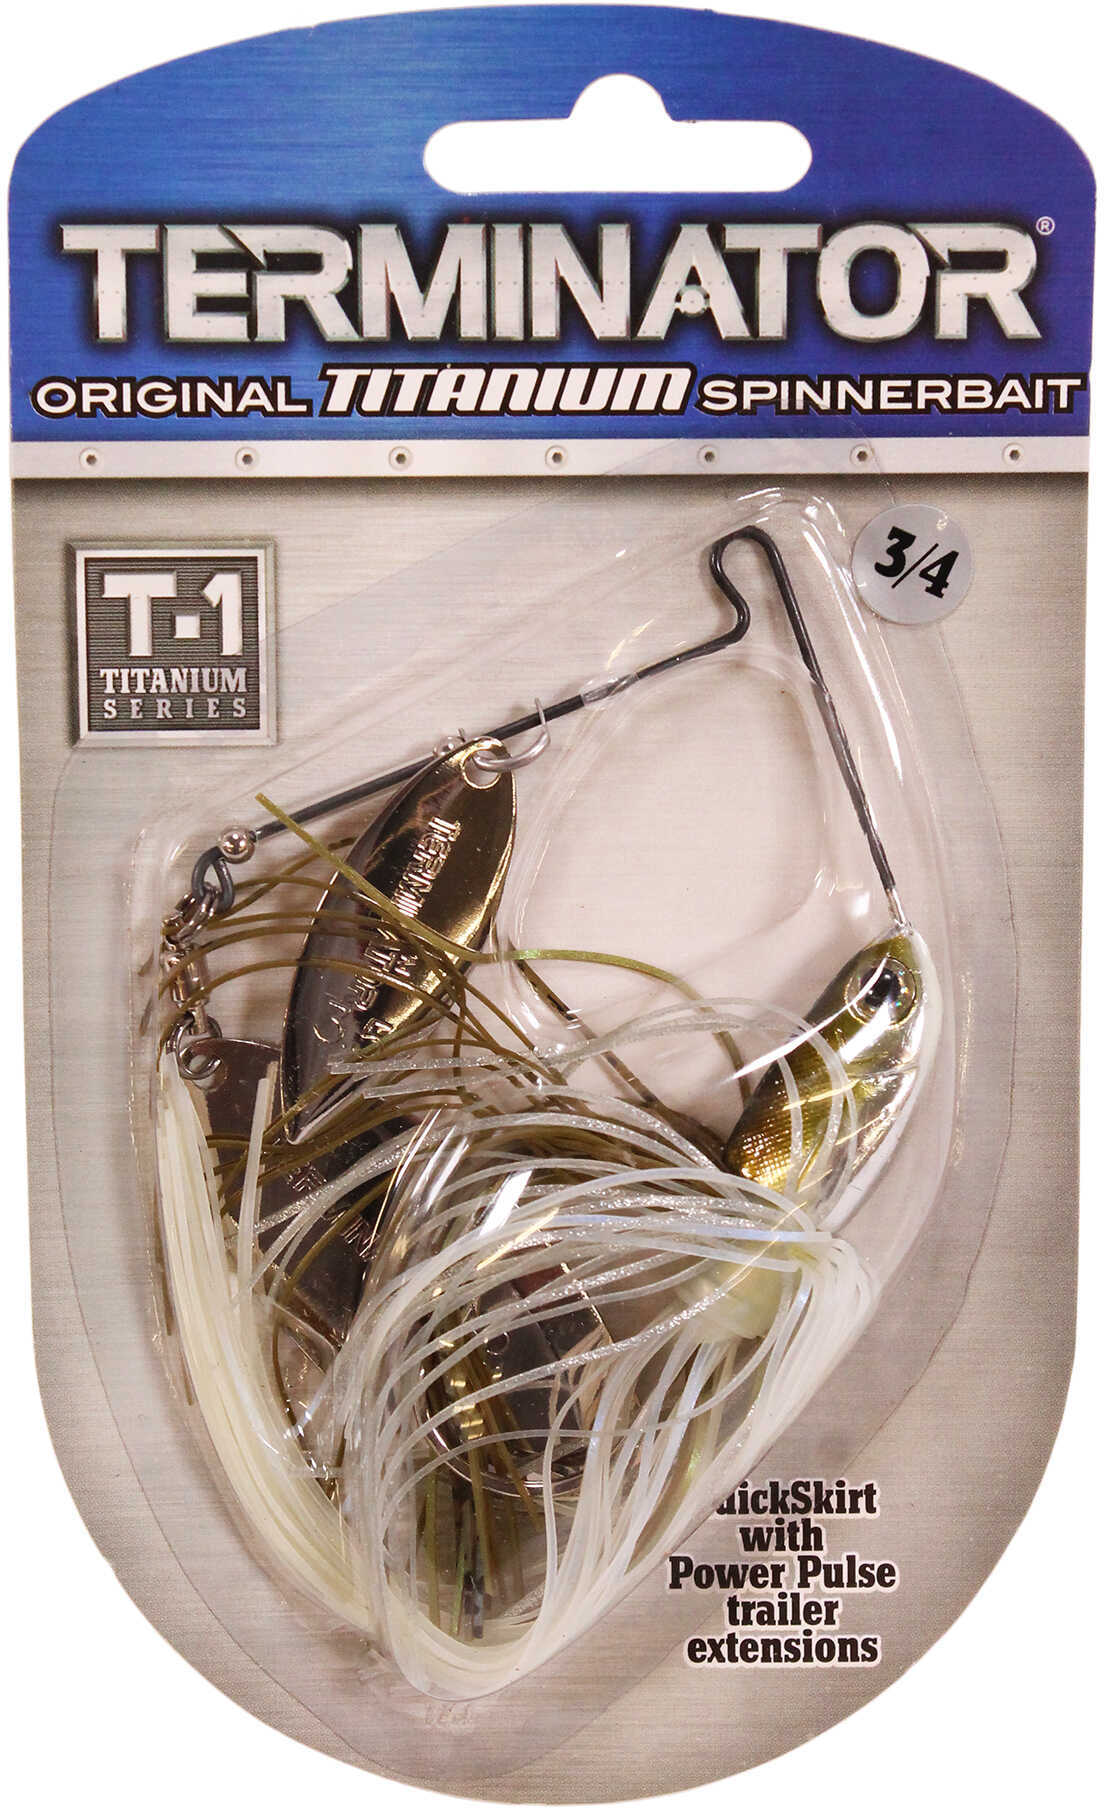 Terminator T-1 Original Titanium Spinnerbait 3/4 oz, Willow/Willow Blade  (Nickel/Nickel), Blue Black Herring, Per 1 - 11270564